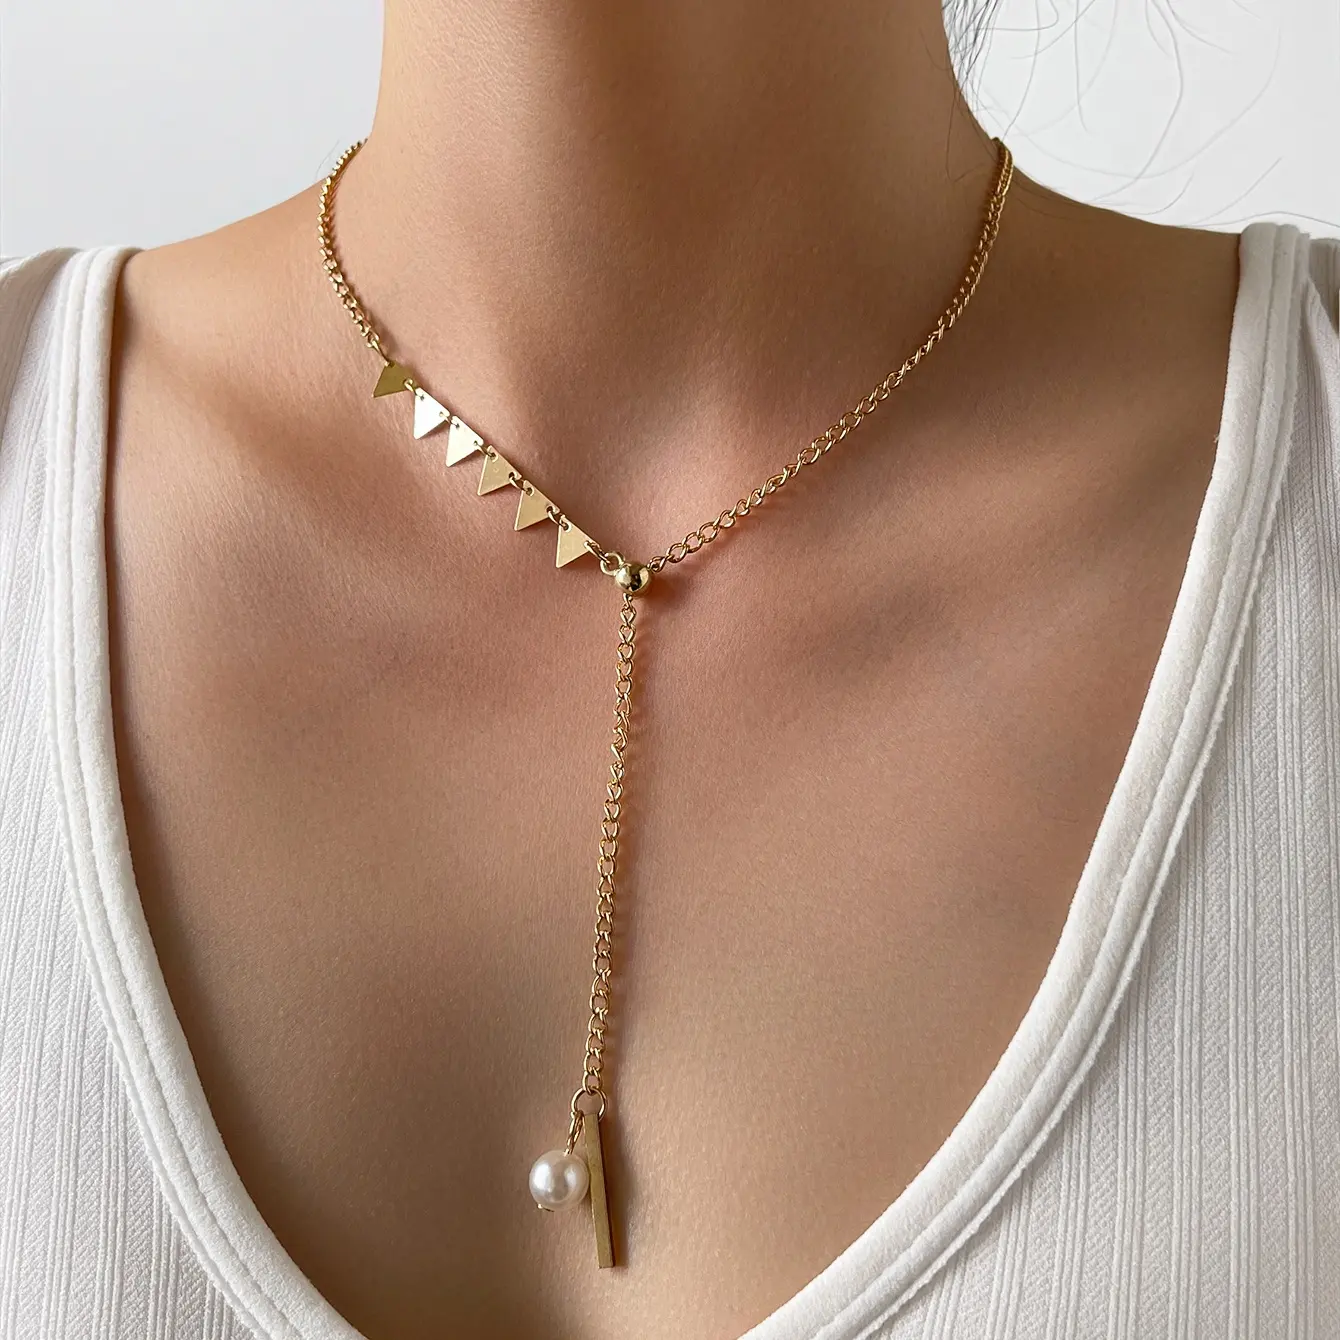 Ready to ShipIn StockFast DispatchSindlan Personalized Gold Long Pearl Pendant Necklace Vintage Luxury Women Jewelry MF0003  